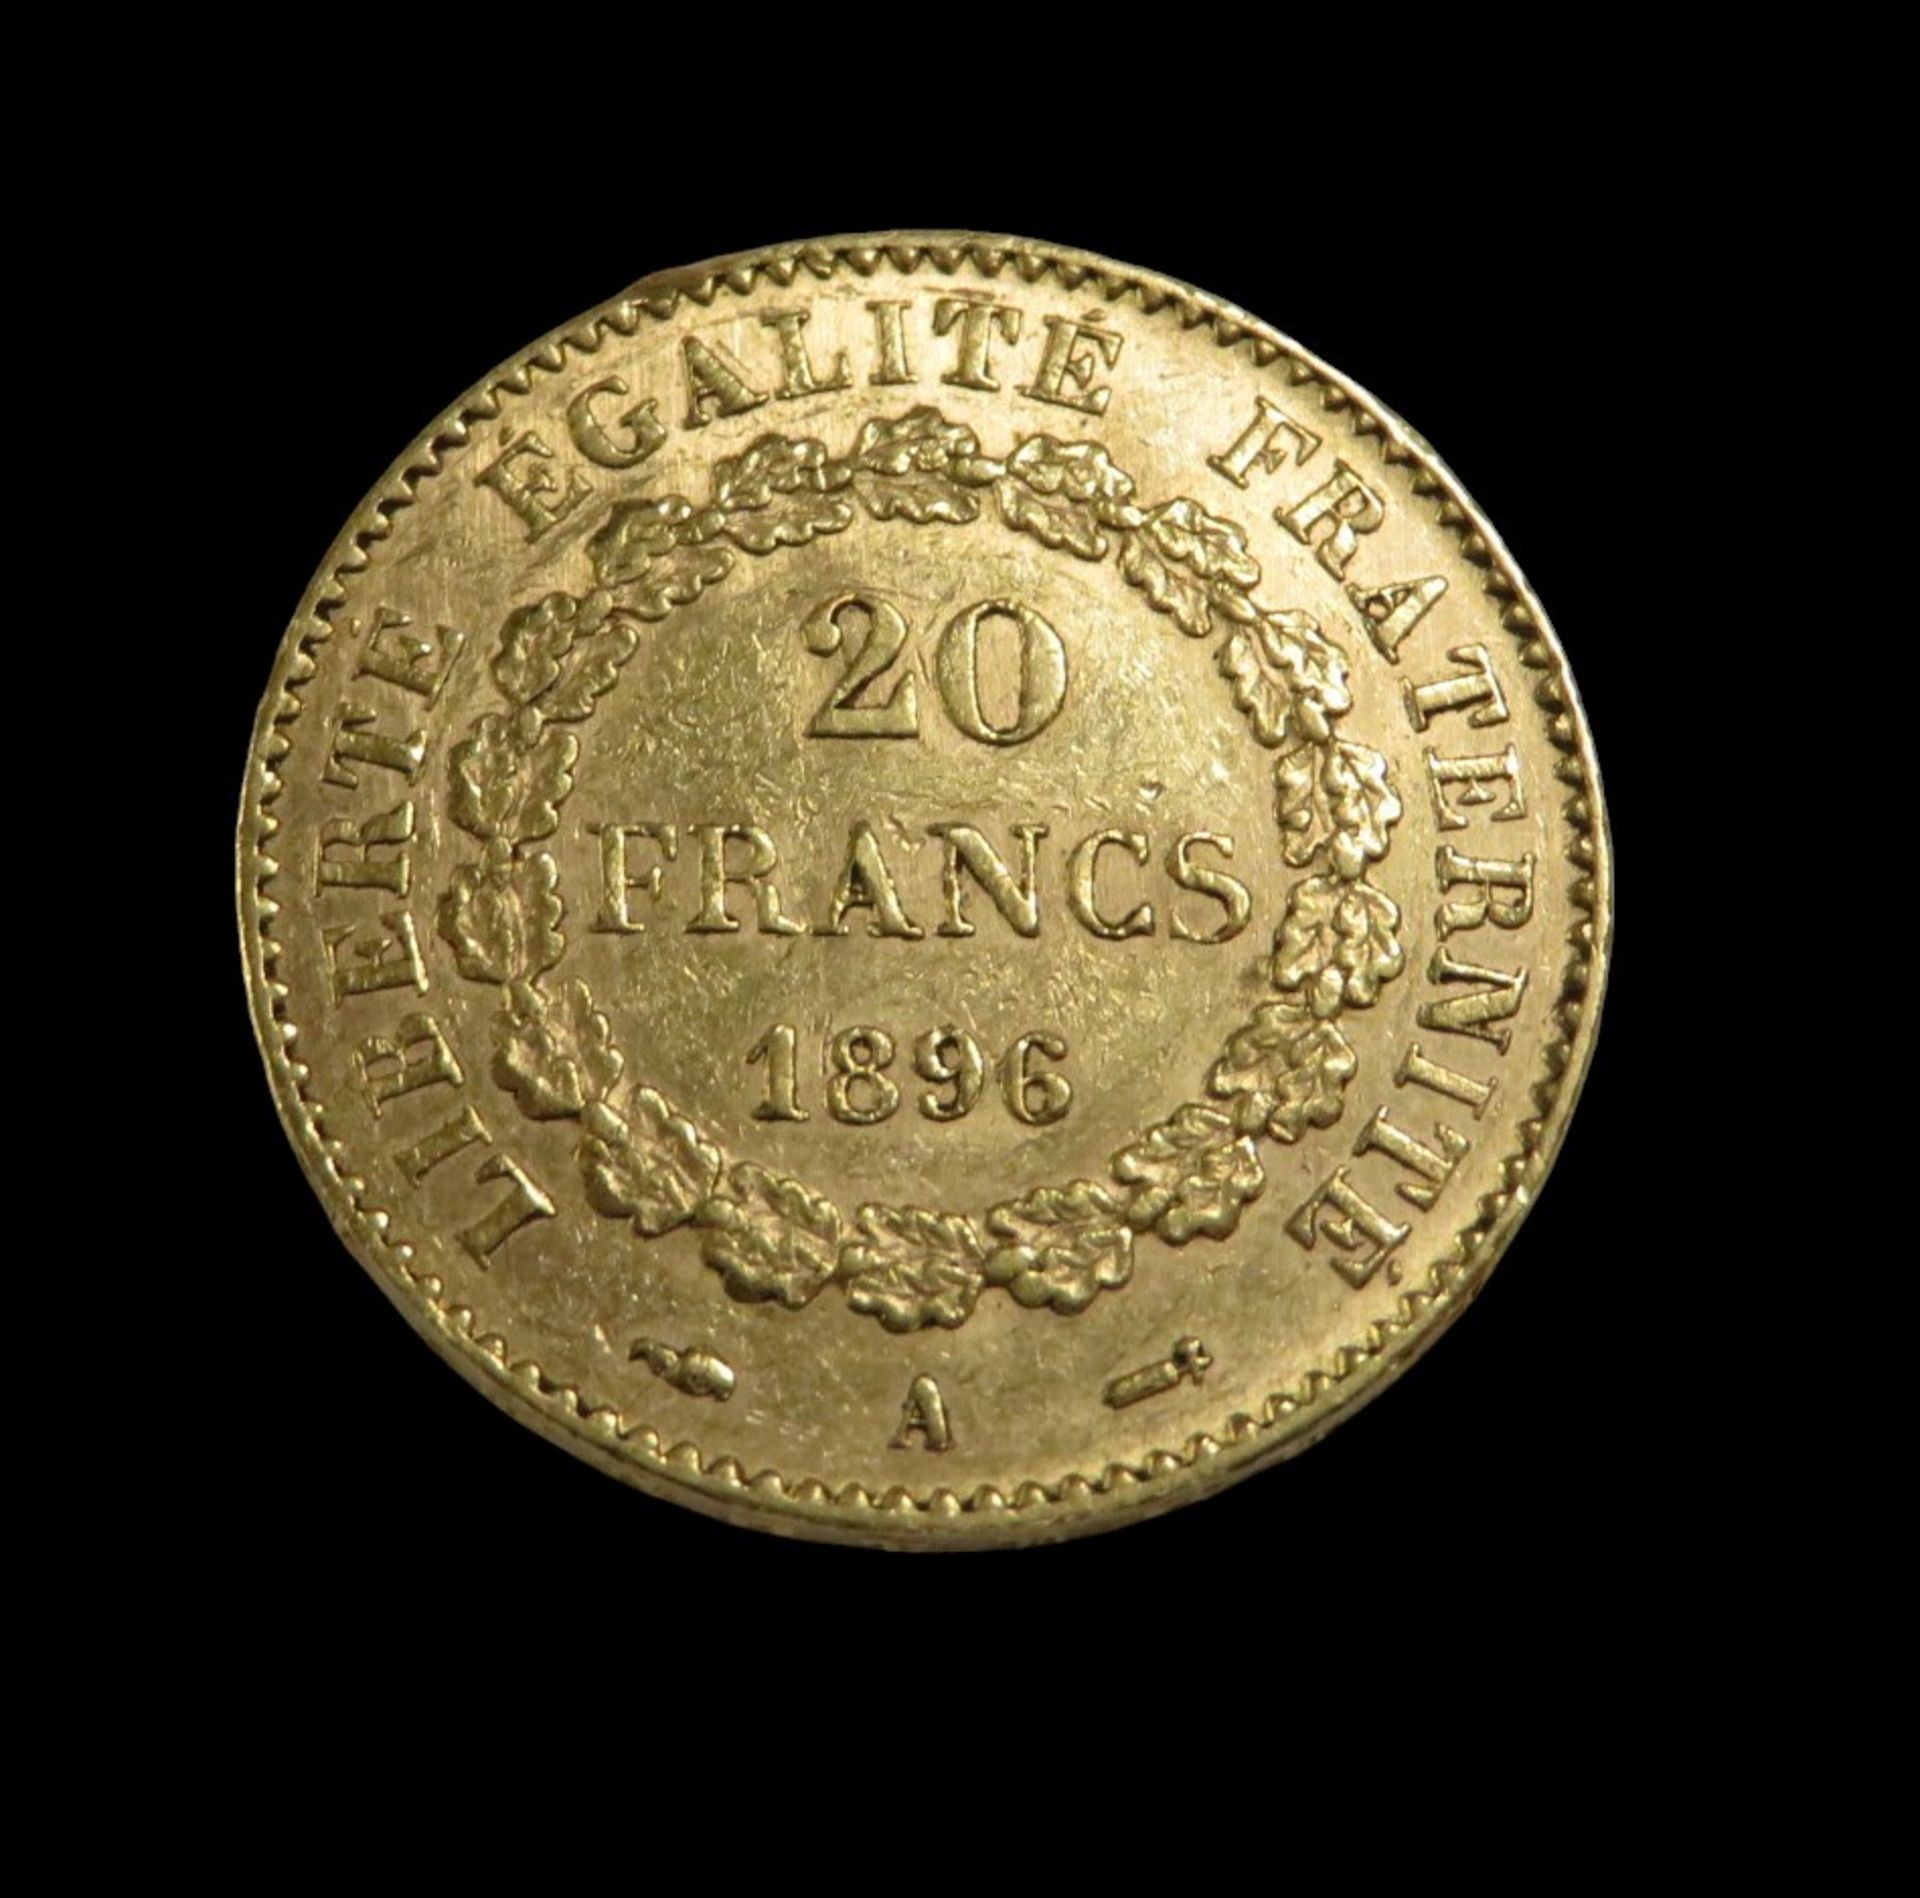 Goldmünze, 20 Francs, Genius/Stehender Engel, 1896, Gold 900/000, 6,4 g, d 2,1 cm. - Bild 2 aus 2